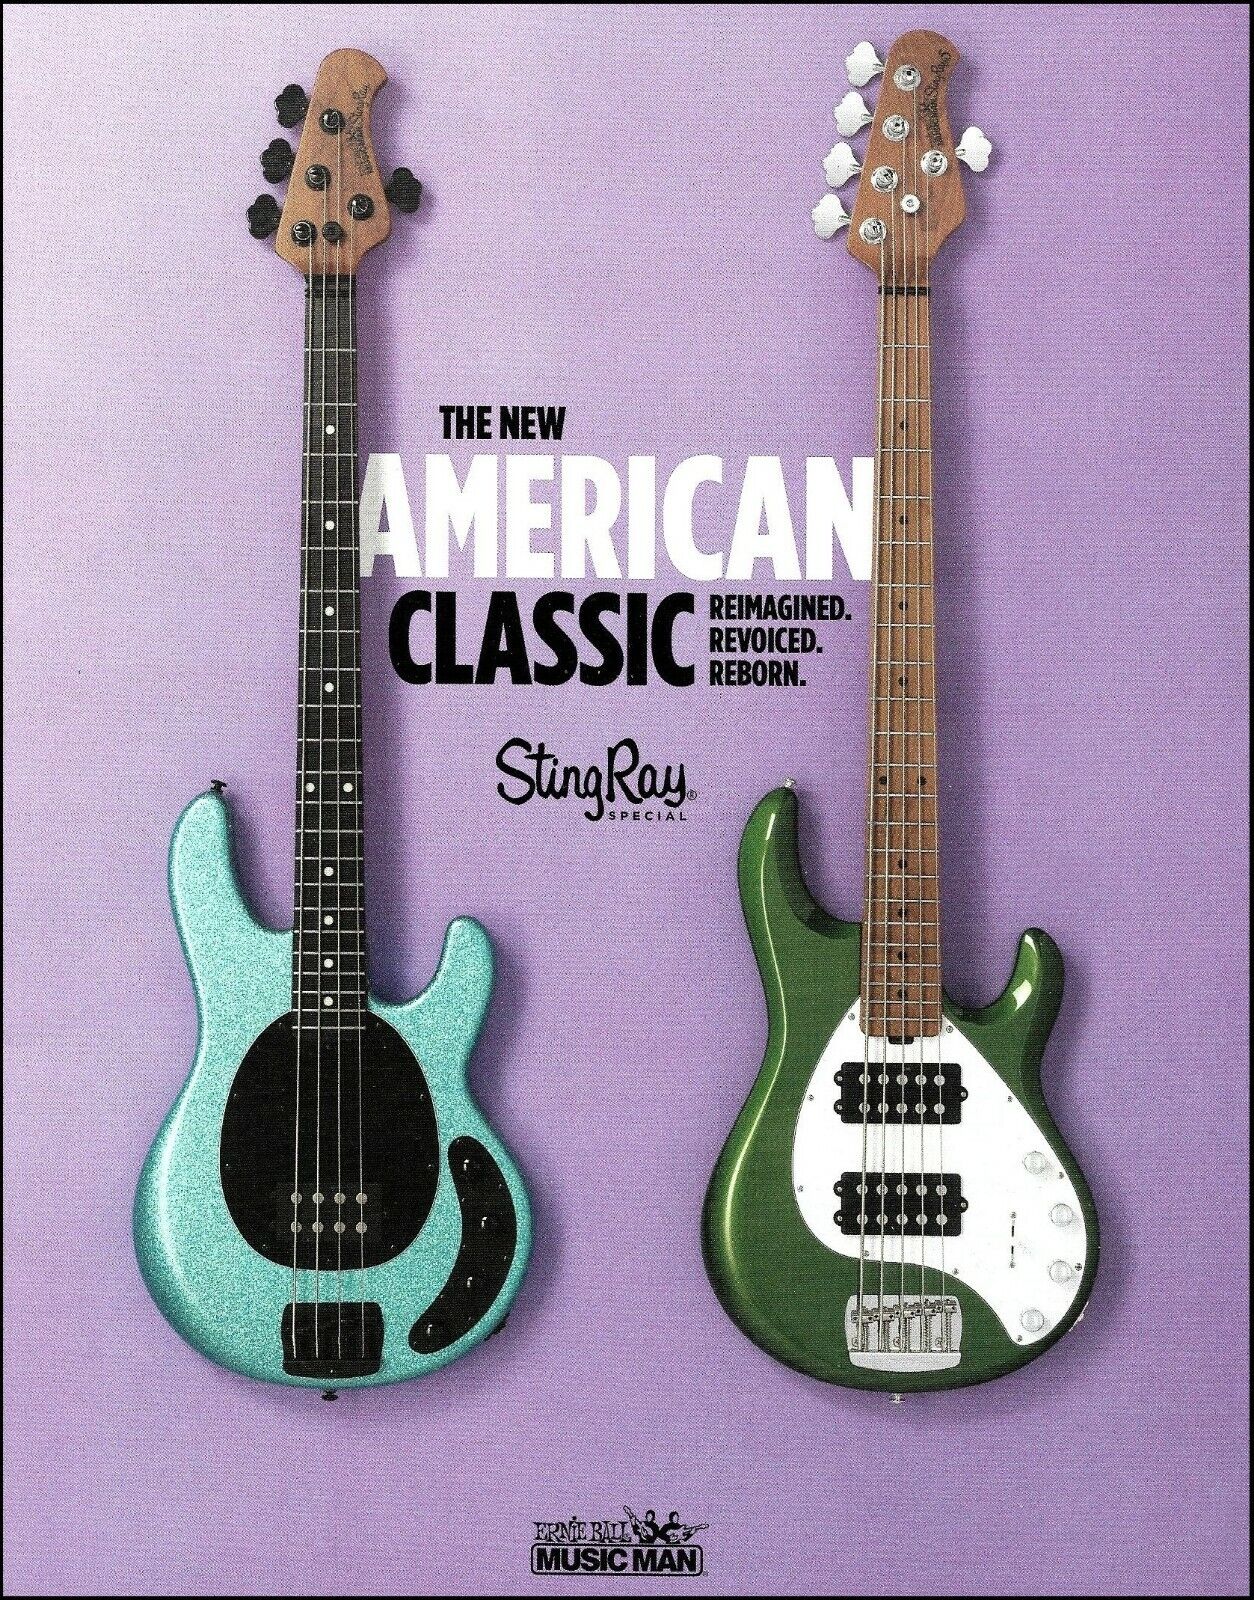 Ernie Ball Music Man Stingray Special Bass Guitar advertisement 2018 ad print